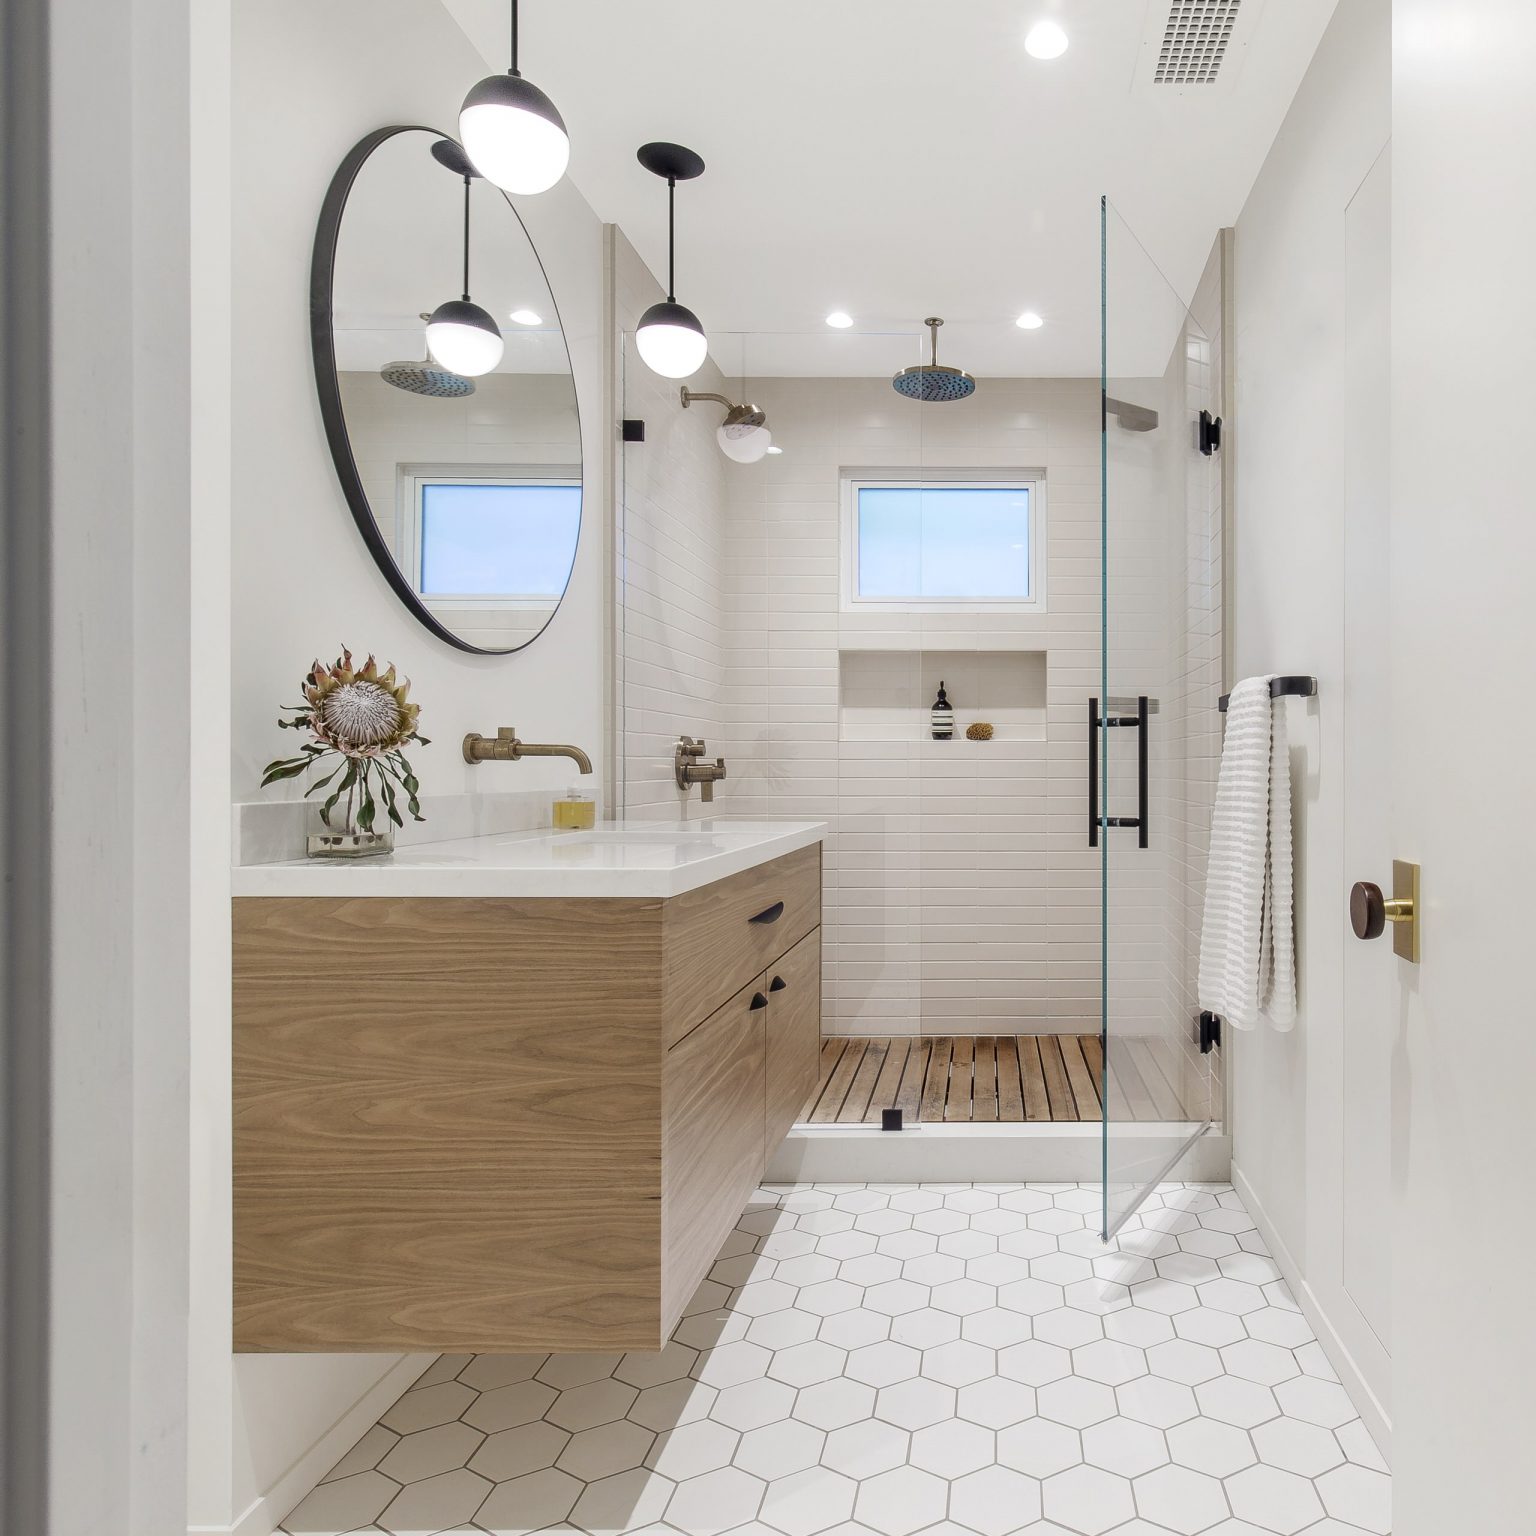 20 Impressive Mid Century Modern Bathroom Designs You Must See 3 1536x1536 